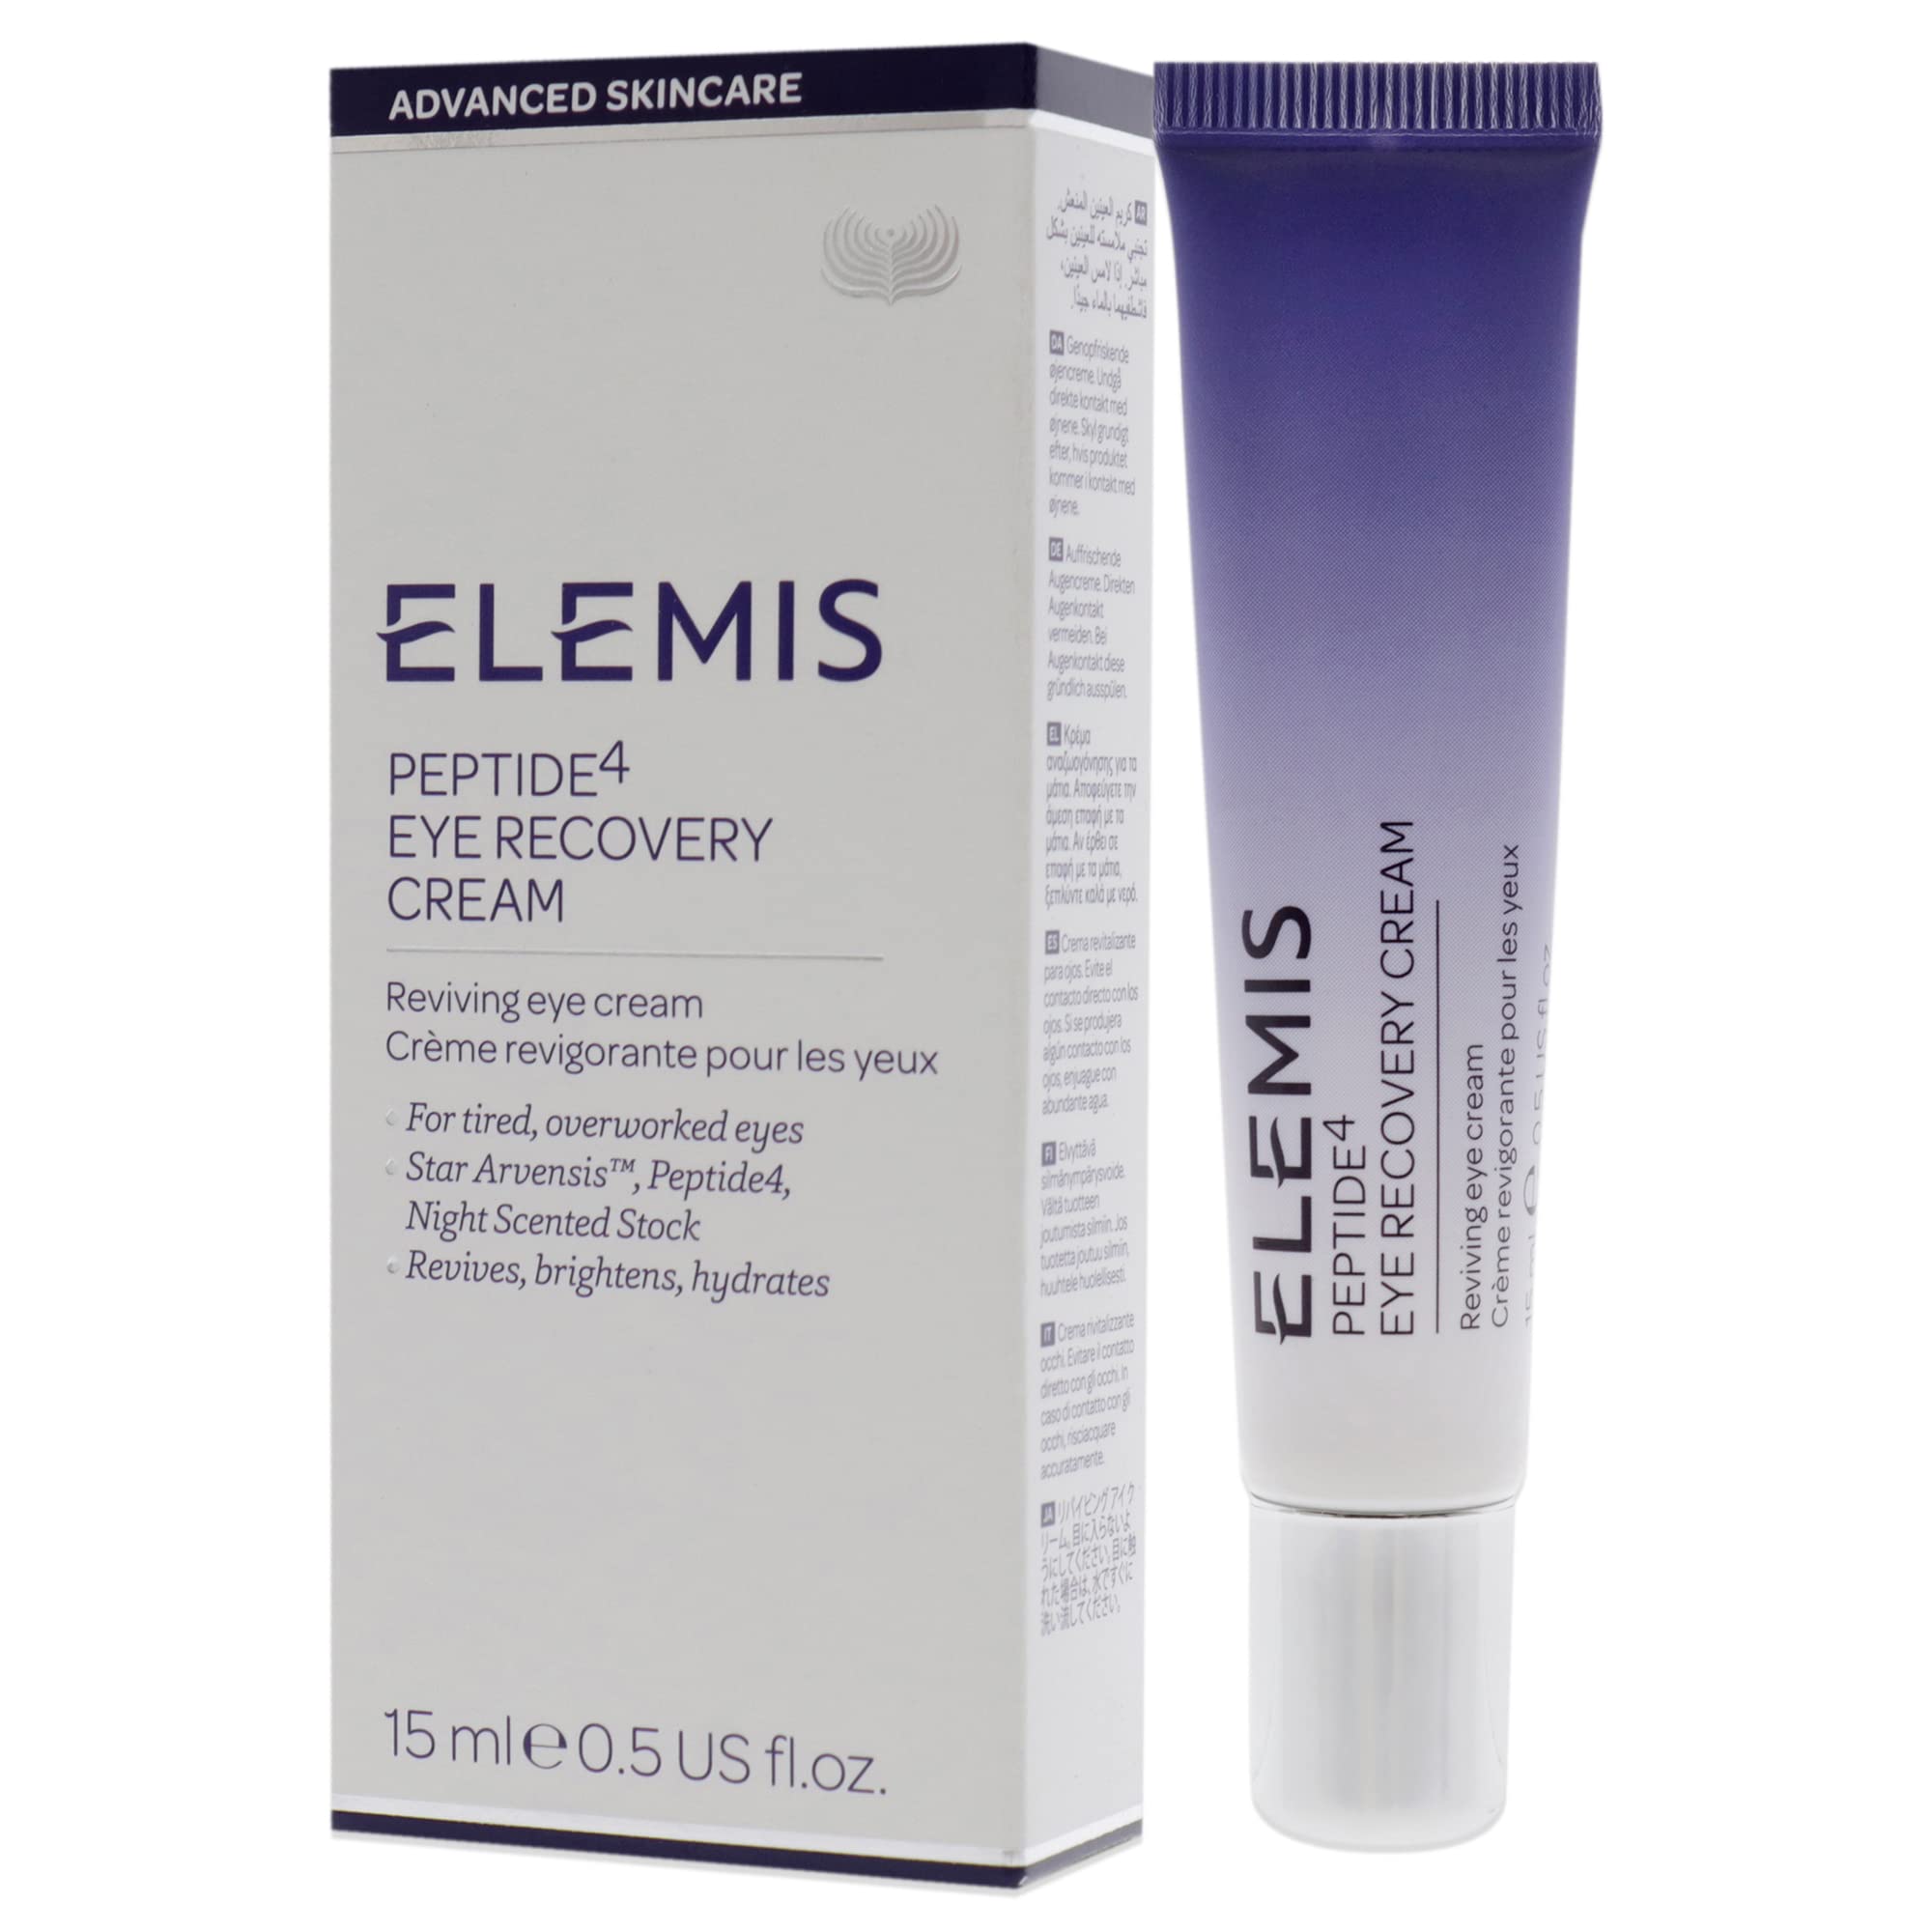 ELEMIS Peptide4 Eye Recovery Cream, Reviving Eye Cream, 0.5 Fl Oz (Pack of 1)